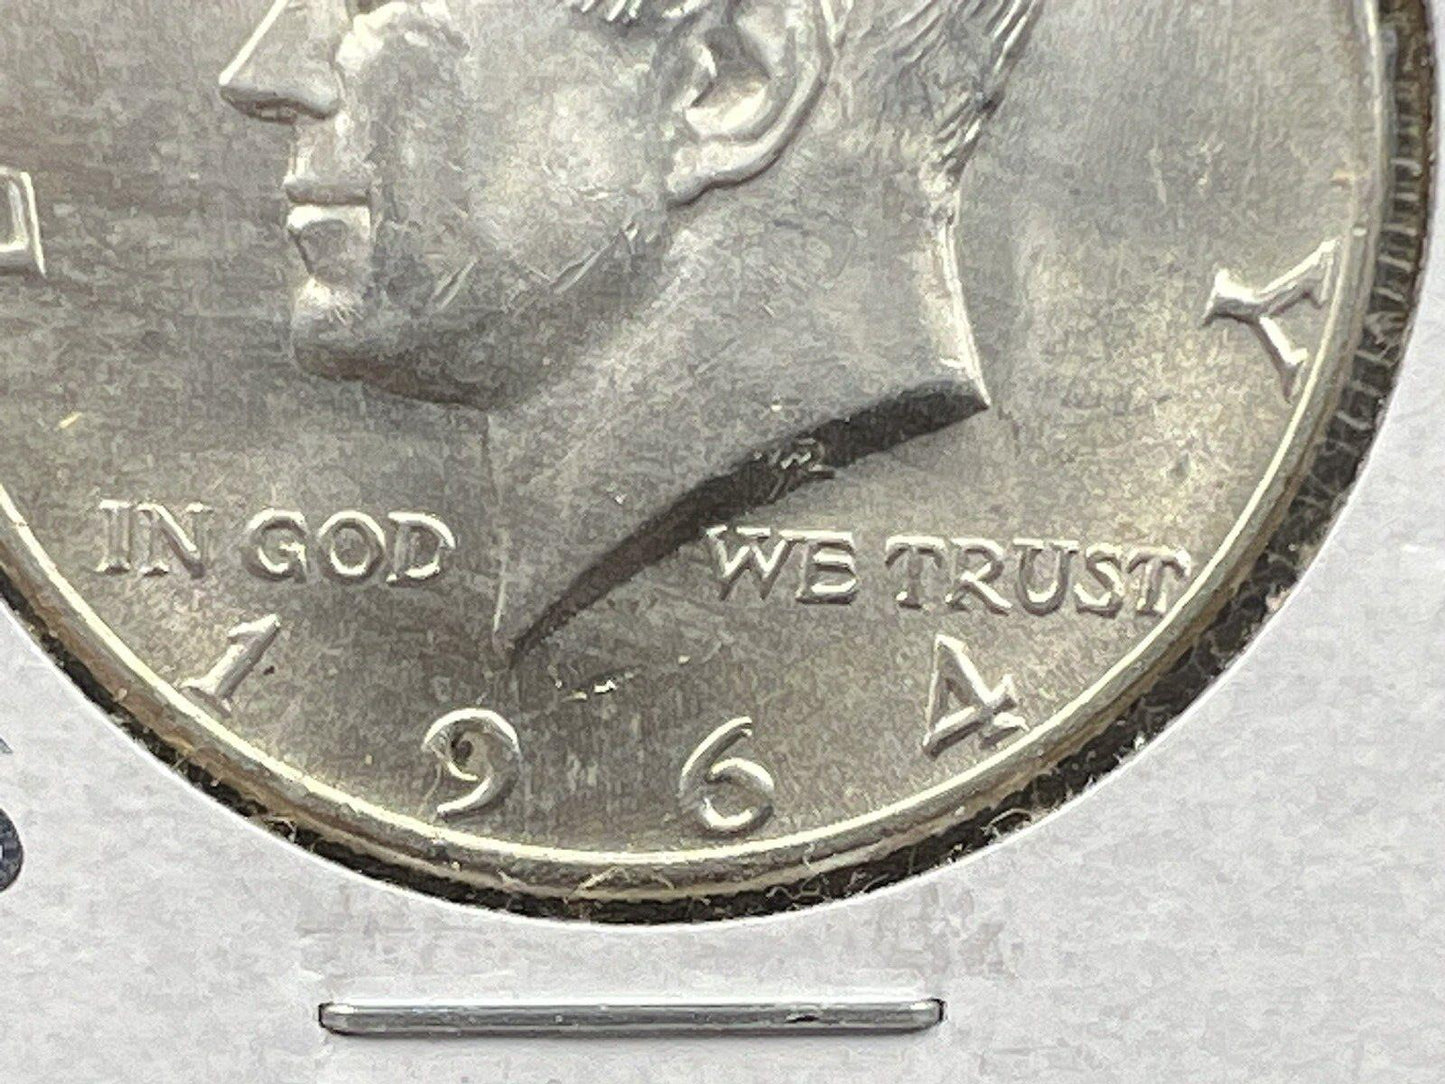 1964 D 50C Kennedy Half Dollar Coin CH BU UNC DDO Double Die OBV DDO-015 Variety